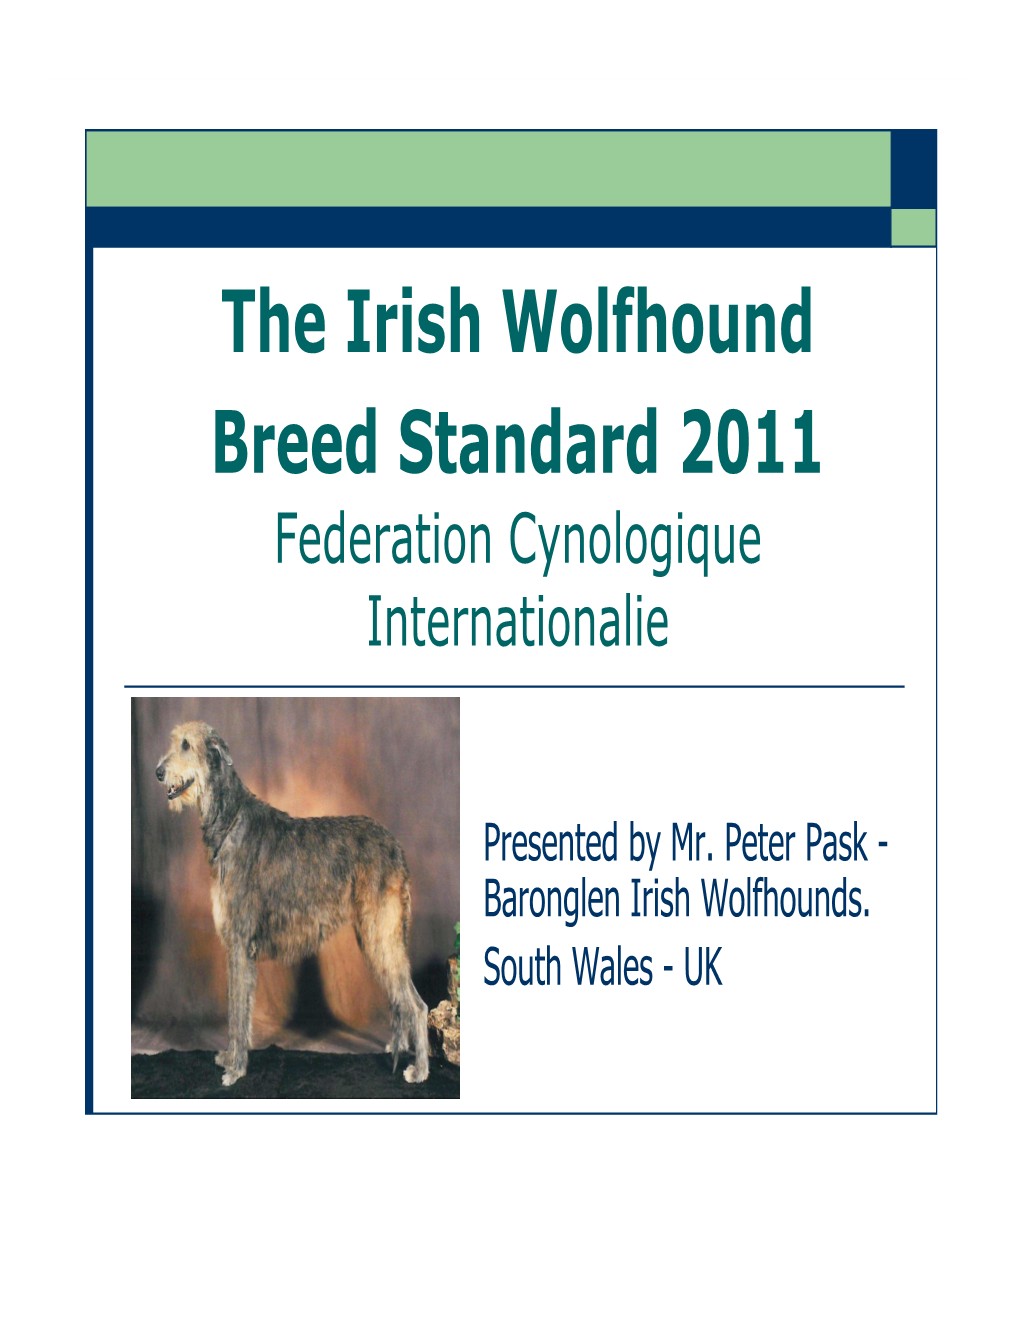 The Irish Wolfhound Breed Standard 2011 Federation Cynologique Internationalie